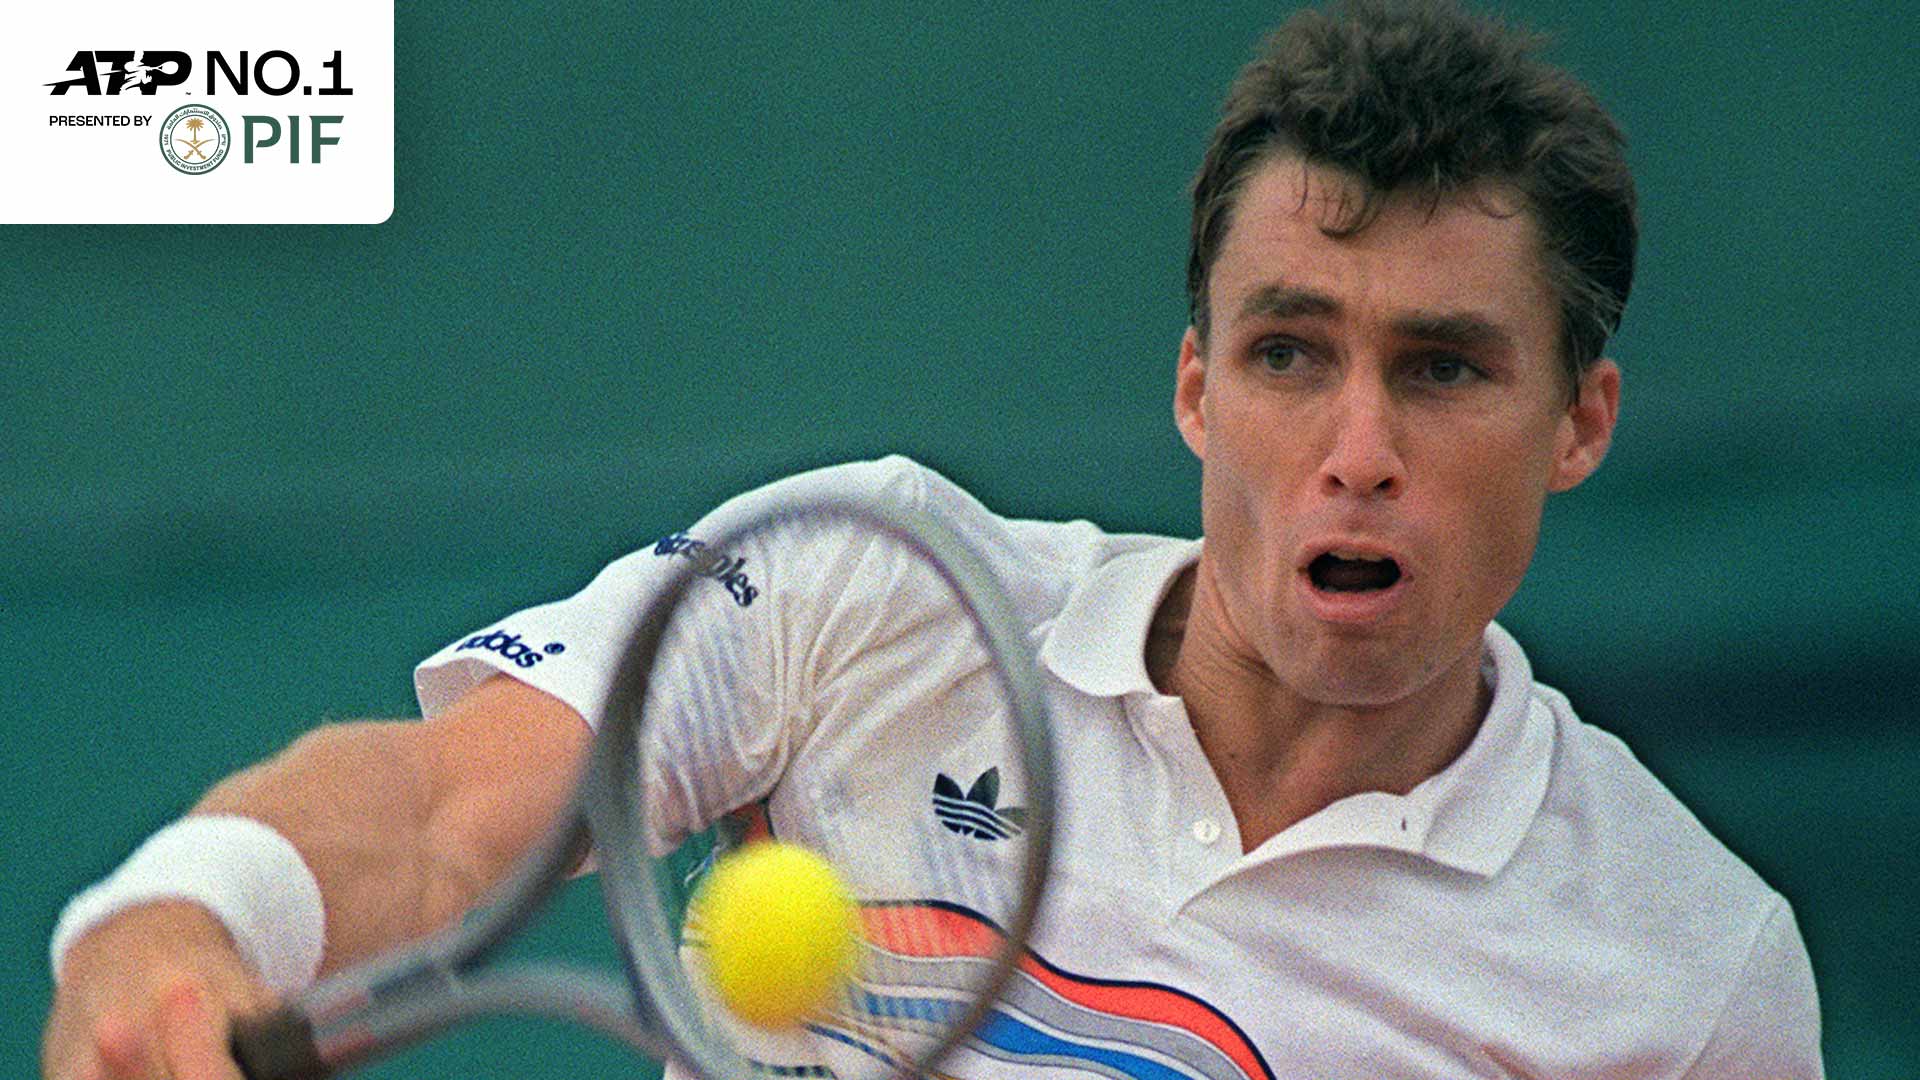 Ivan Lendl in action at Roland Garros in 1987.